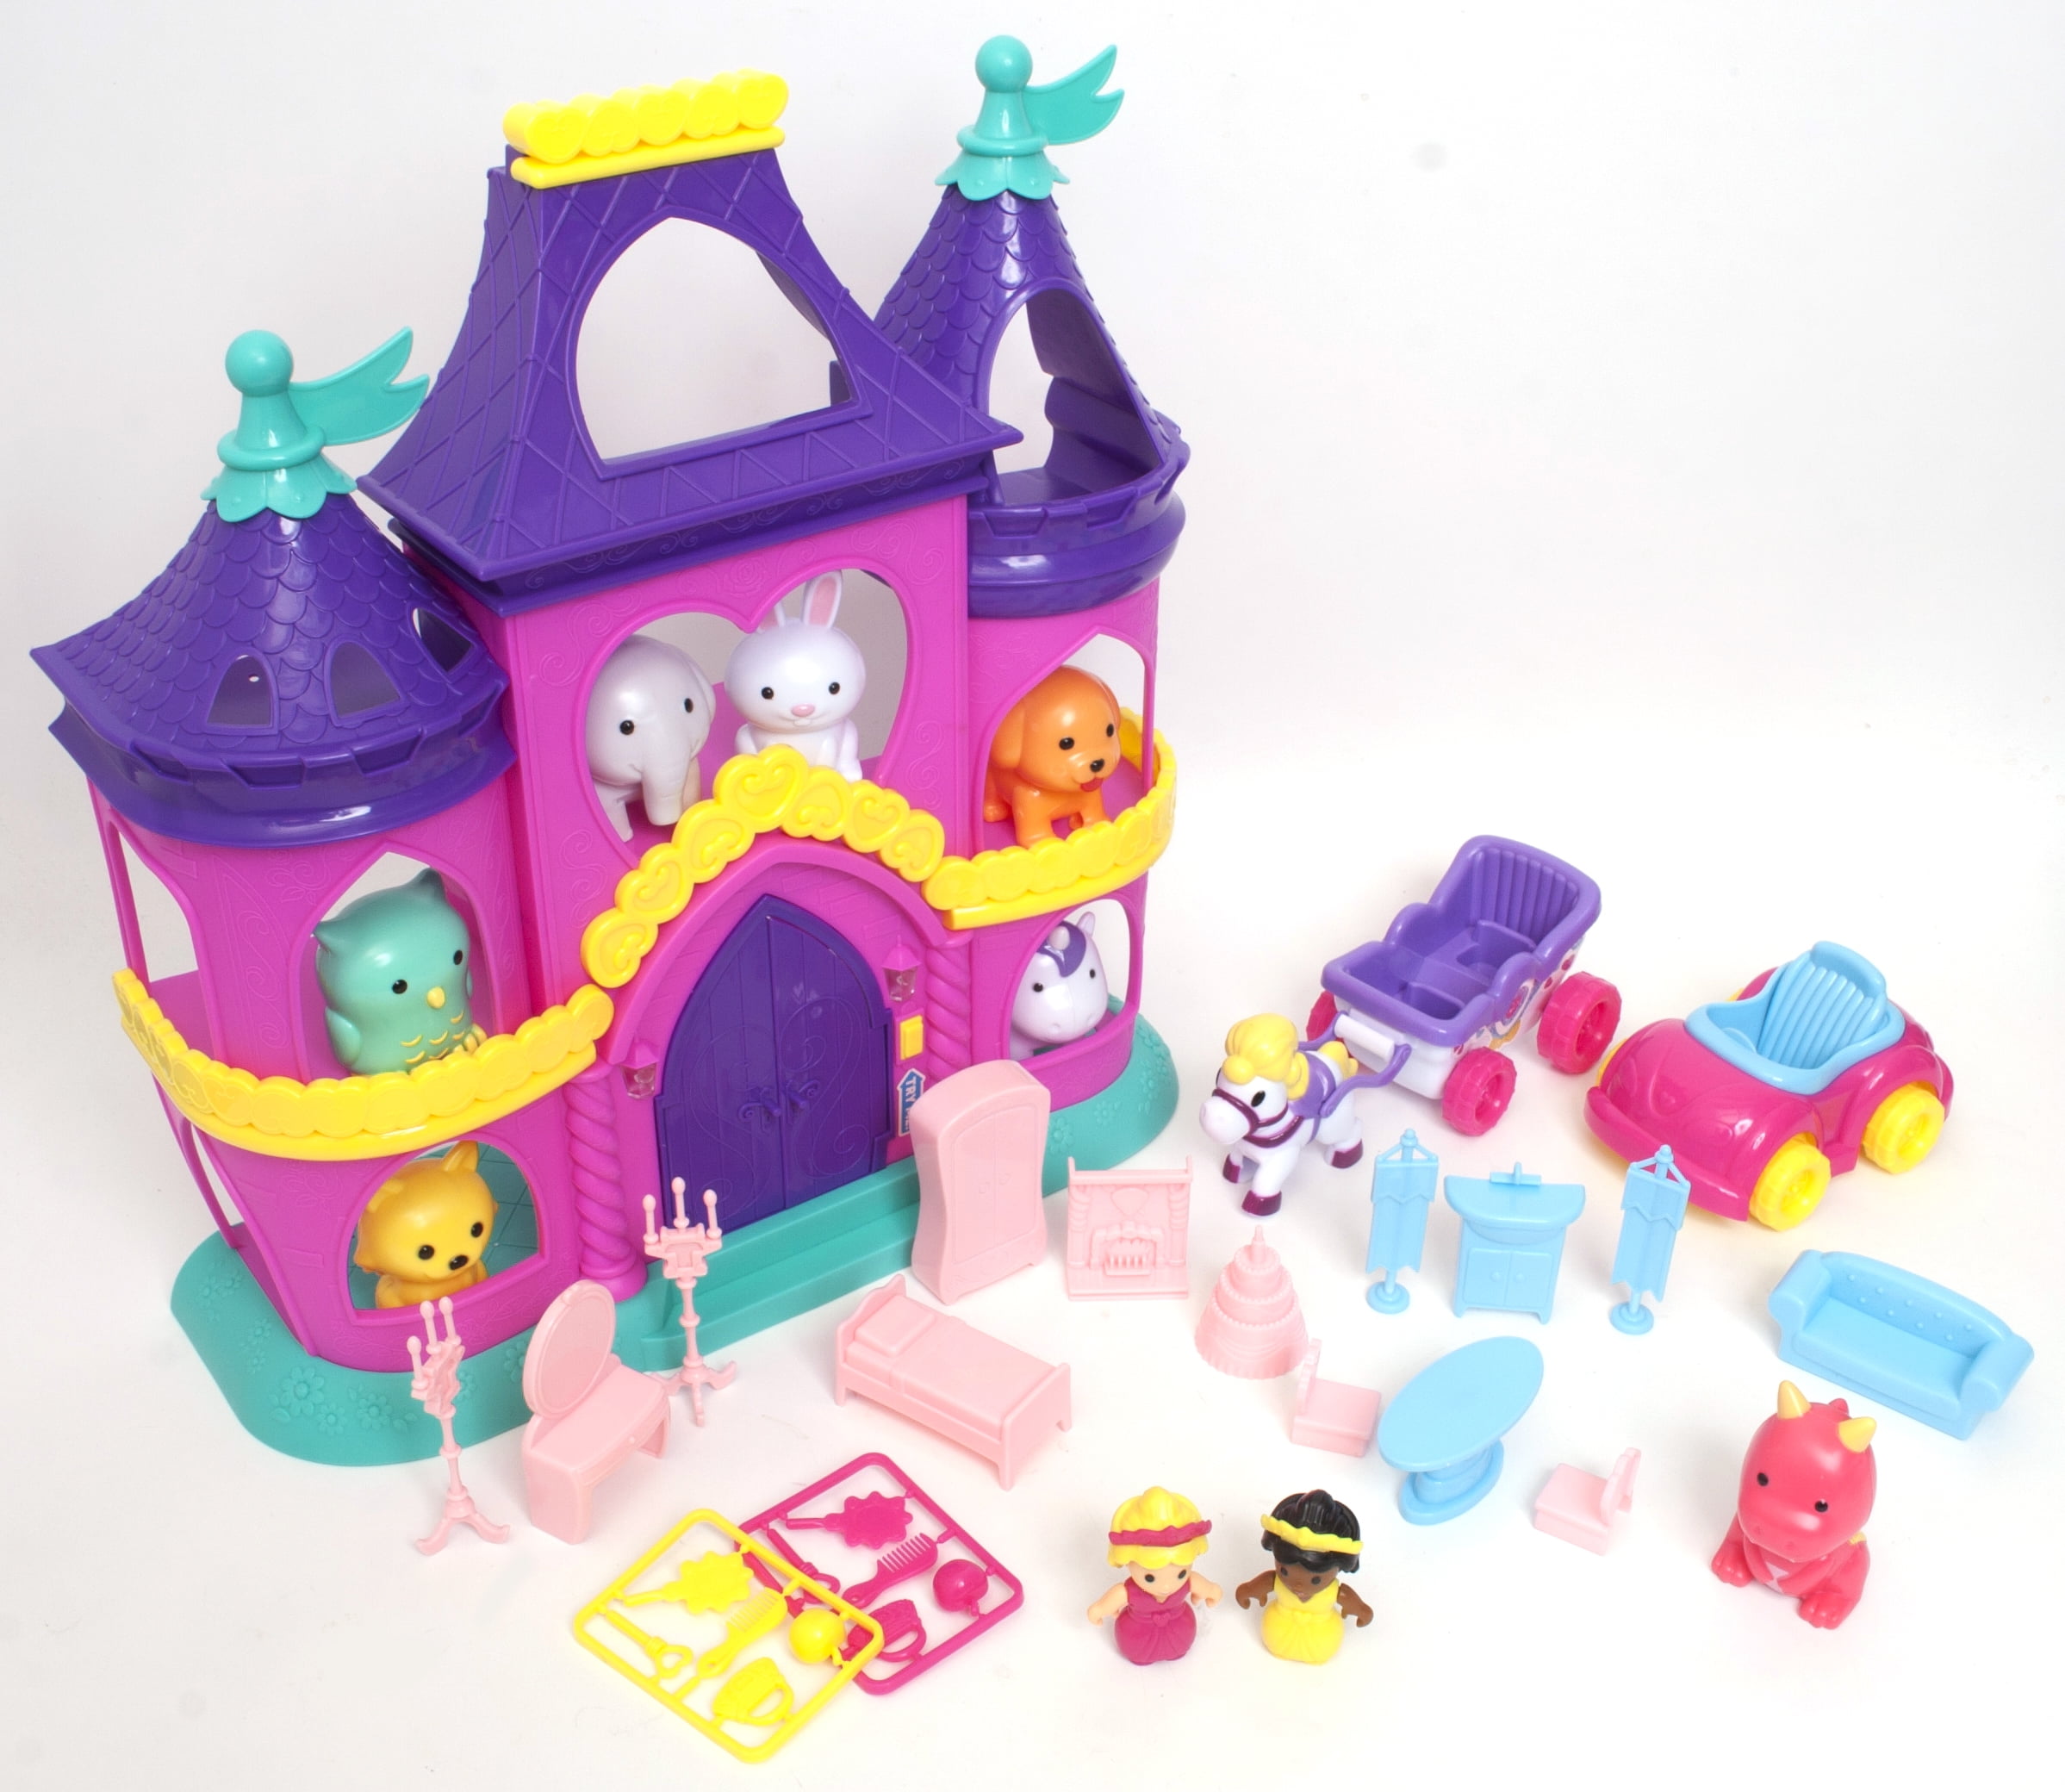 Kid Connection Fantasy Princess Castle Play Set, 37 Pieces